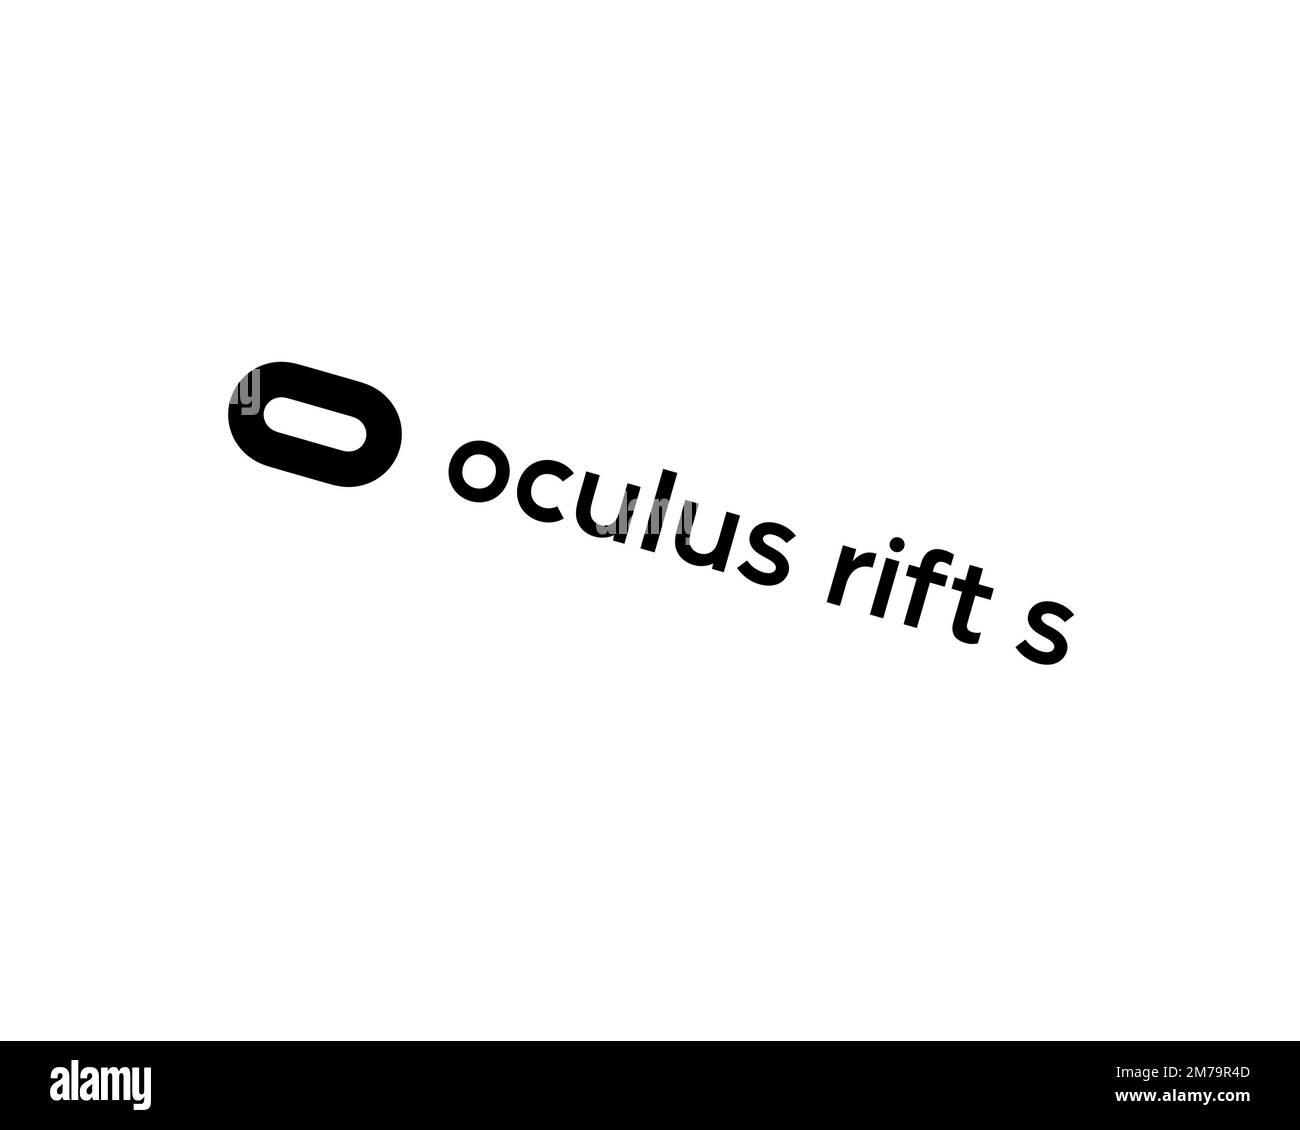 Oculus Rift S, logo ruotato, sfondo bianco B Foto Stock